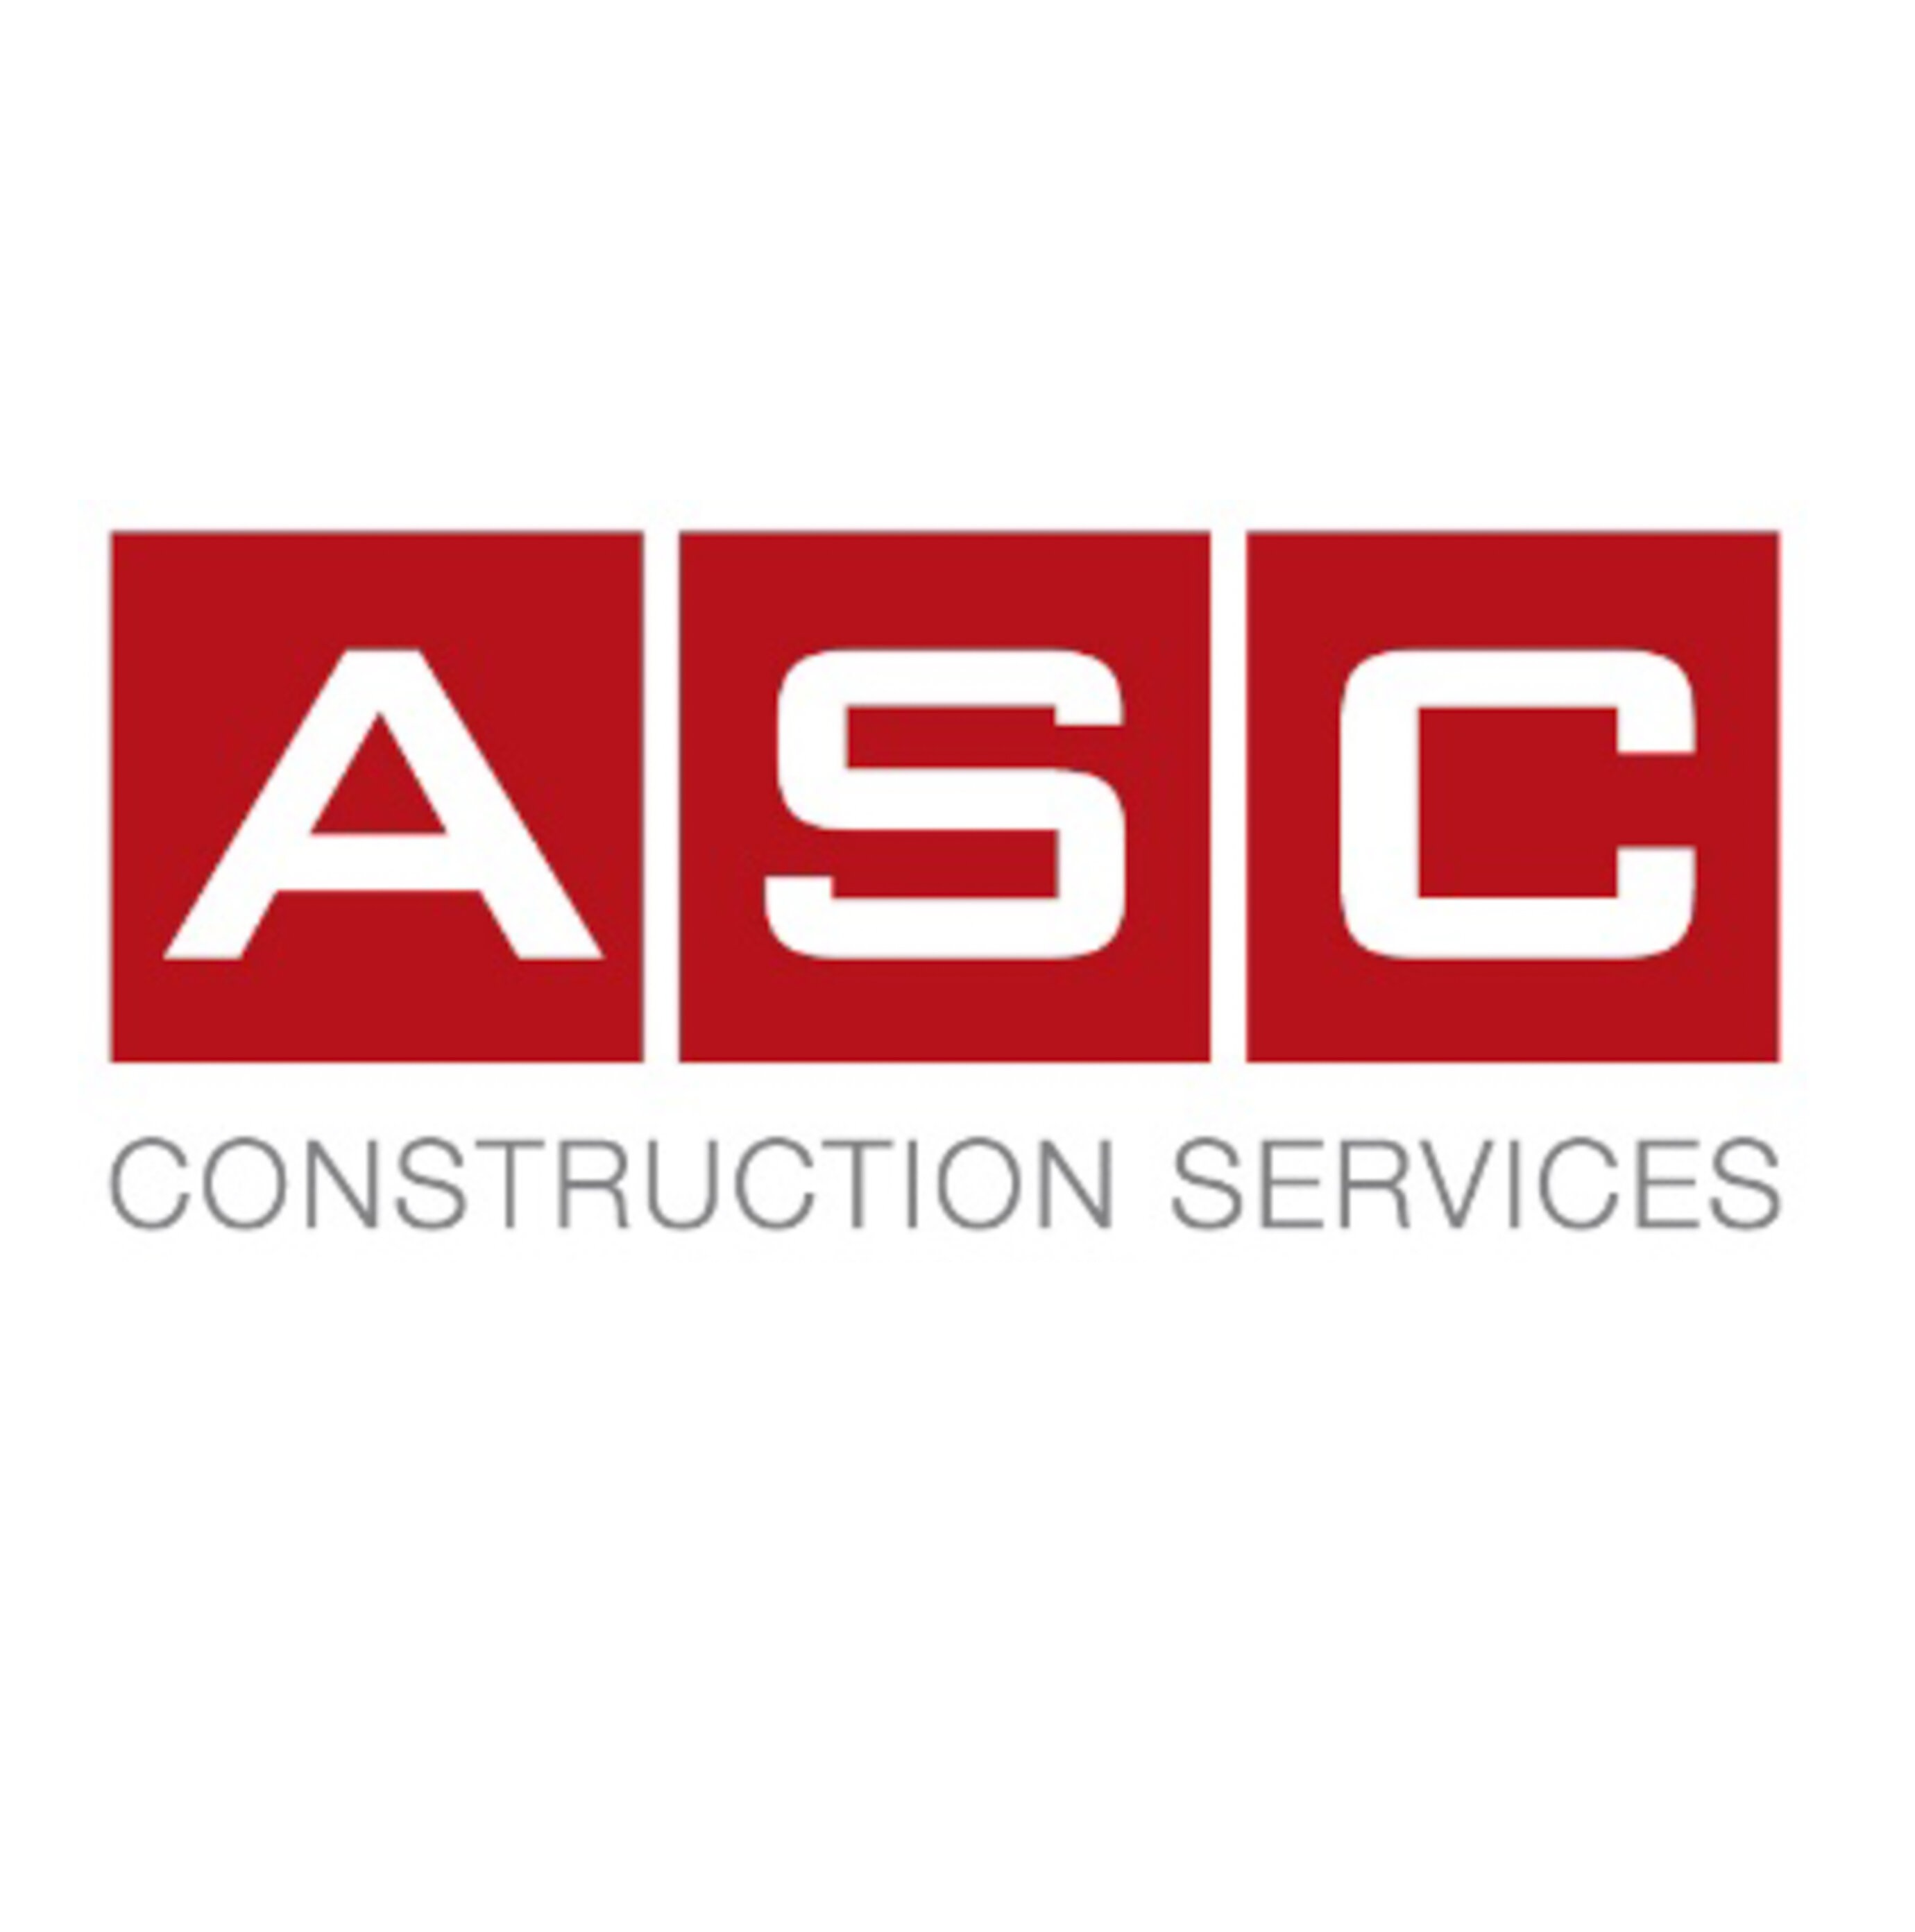 ASC Constructioneg